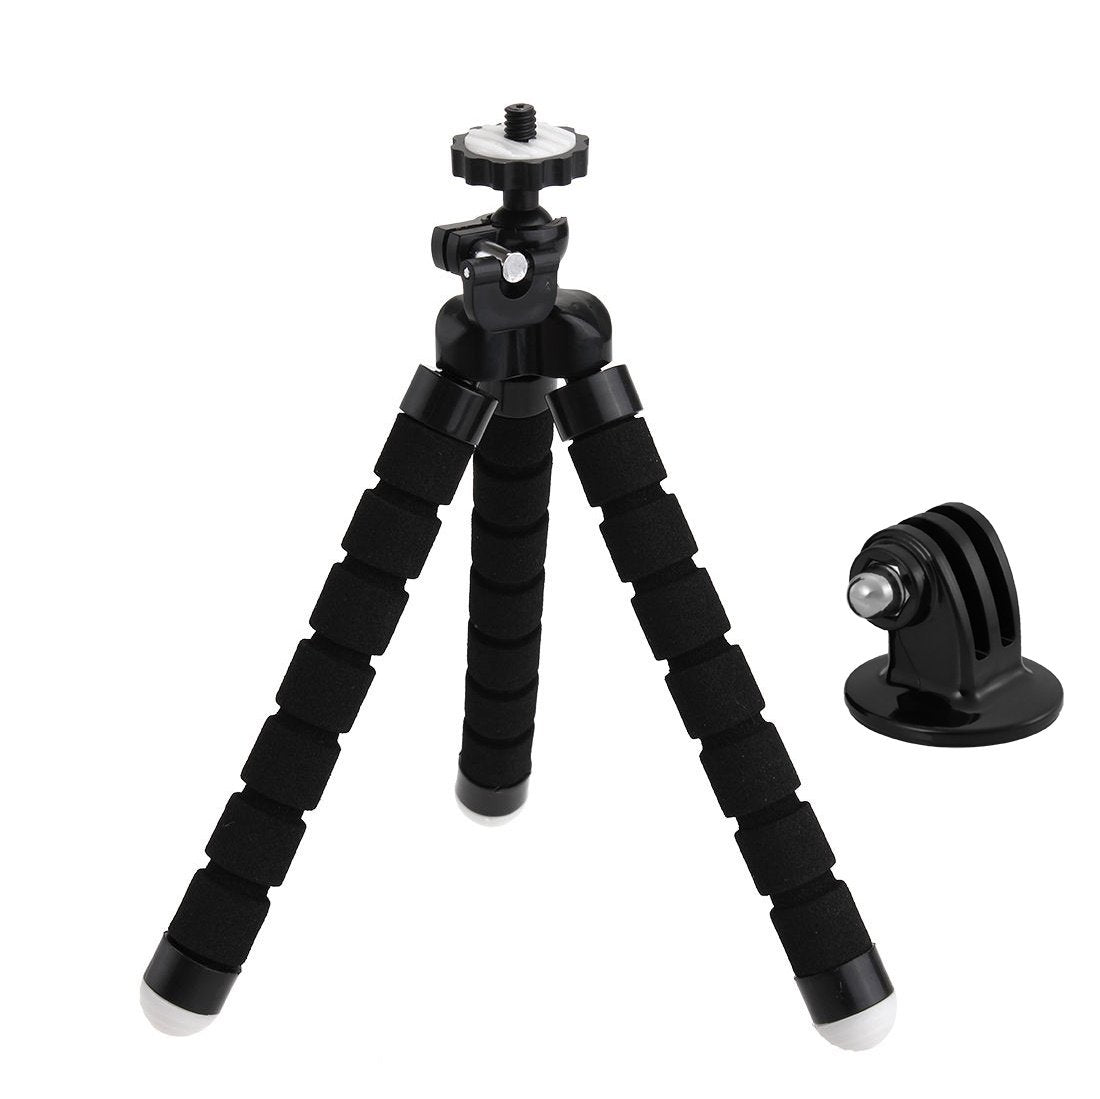 Tripod Mini Octopus Design Handheld Stand Grip Holder Mount - for Universal Cameras &amp; Go Pro Attachment - Black